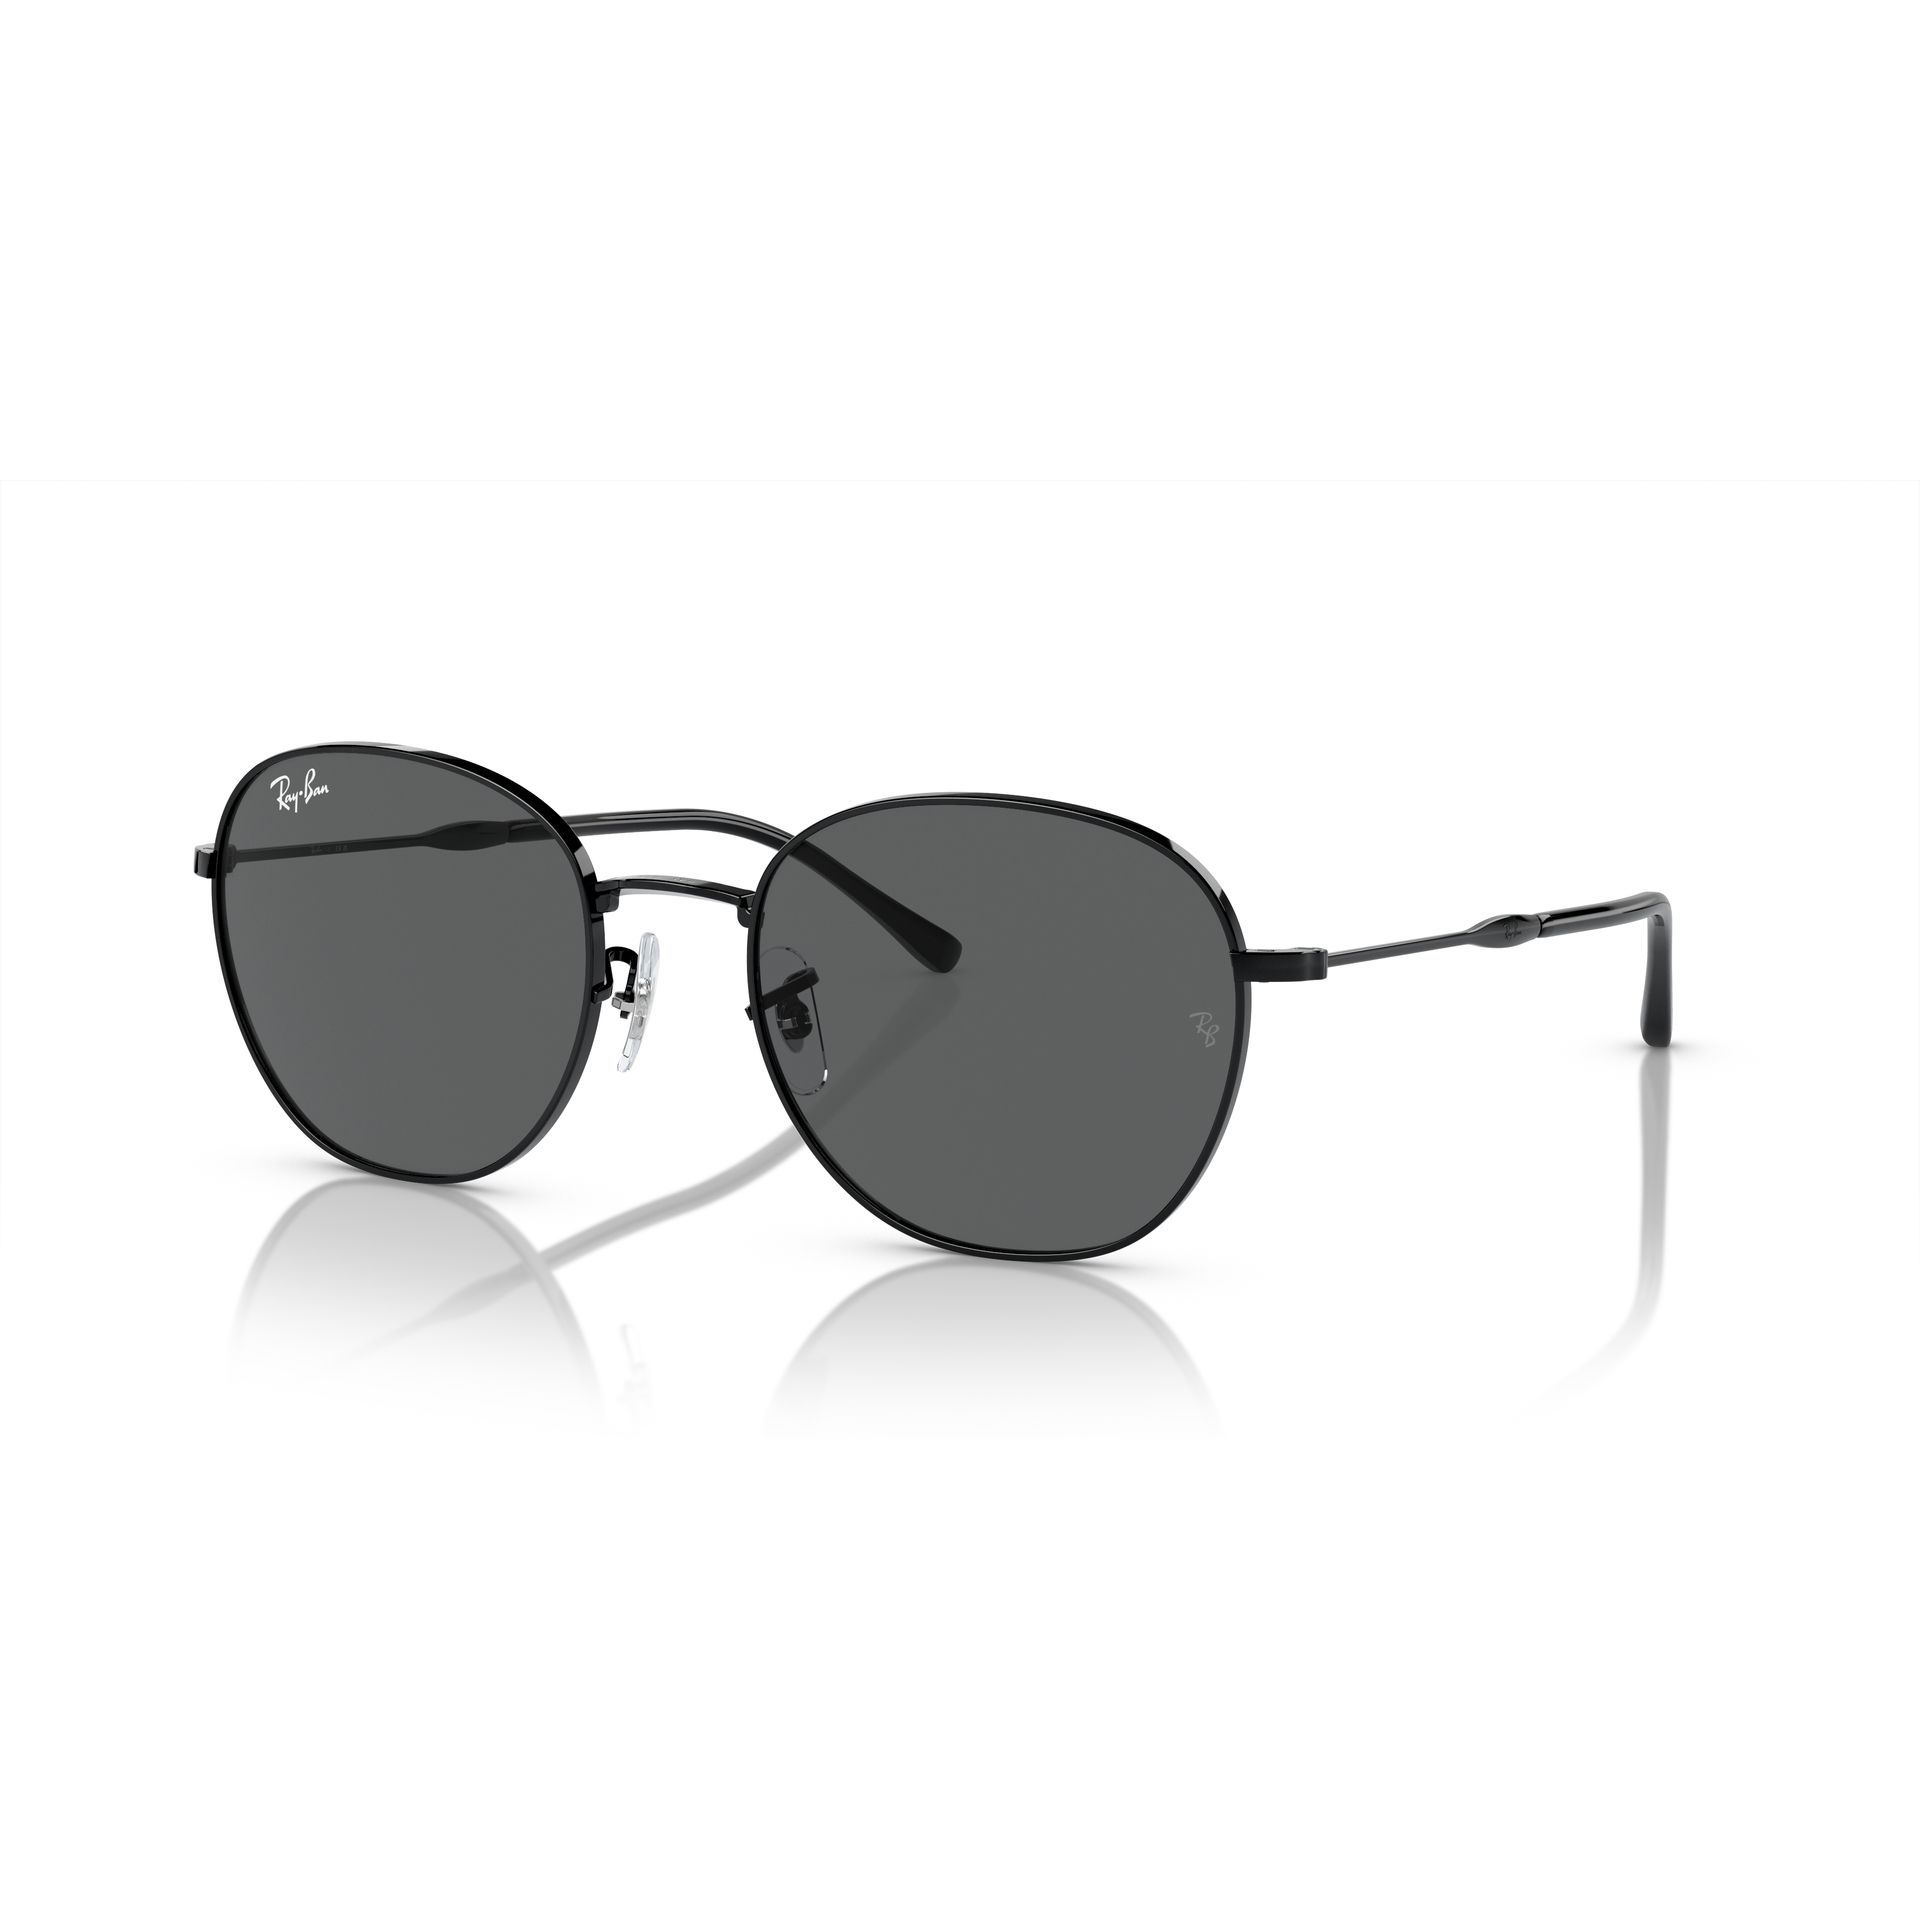 0RB3809 Round Sunglasses 002 B1 - size 53